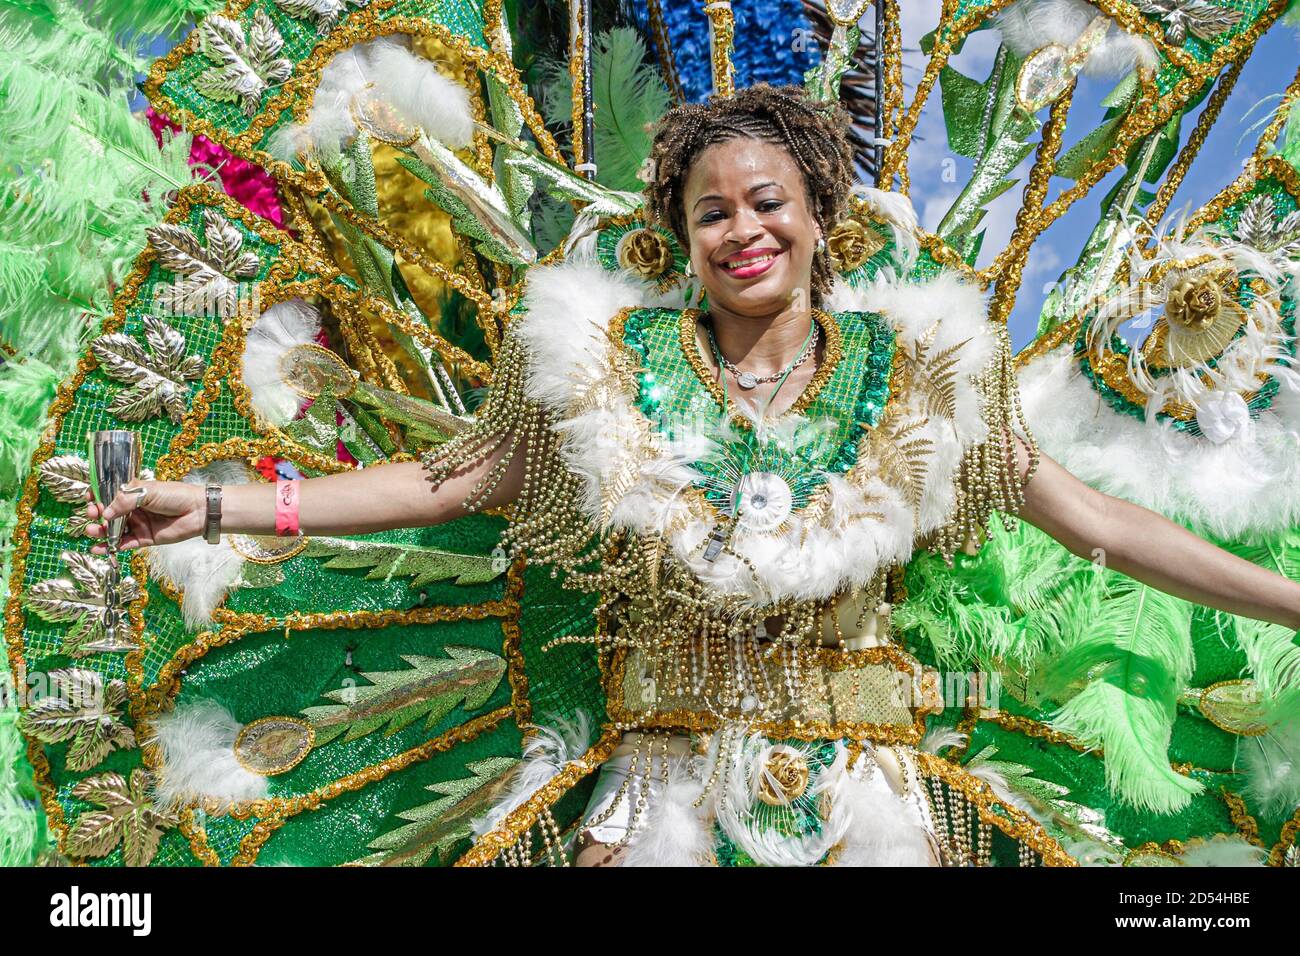 Miami Florida,Homestead Miami Carnival,Caribbean Mardi Gras masqueraders festival,Black African woman female immigrant costume costumes outfit handmad Stock Photo